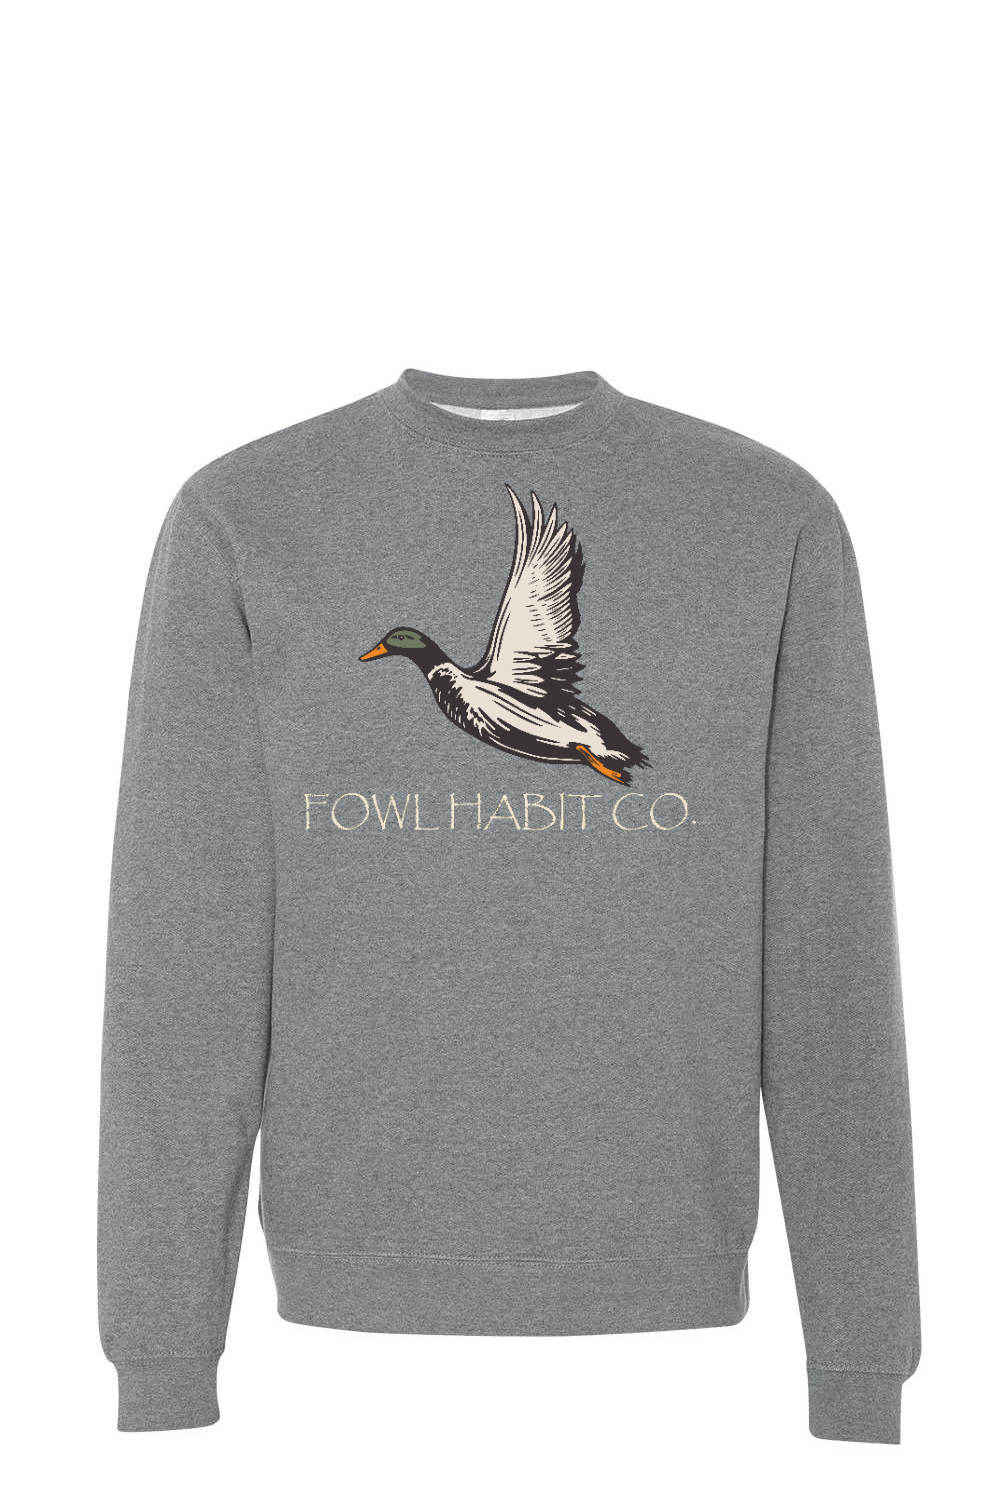 The Vintage Mallard Sweatshirt - Fowl Habit Co.